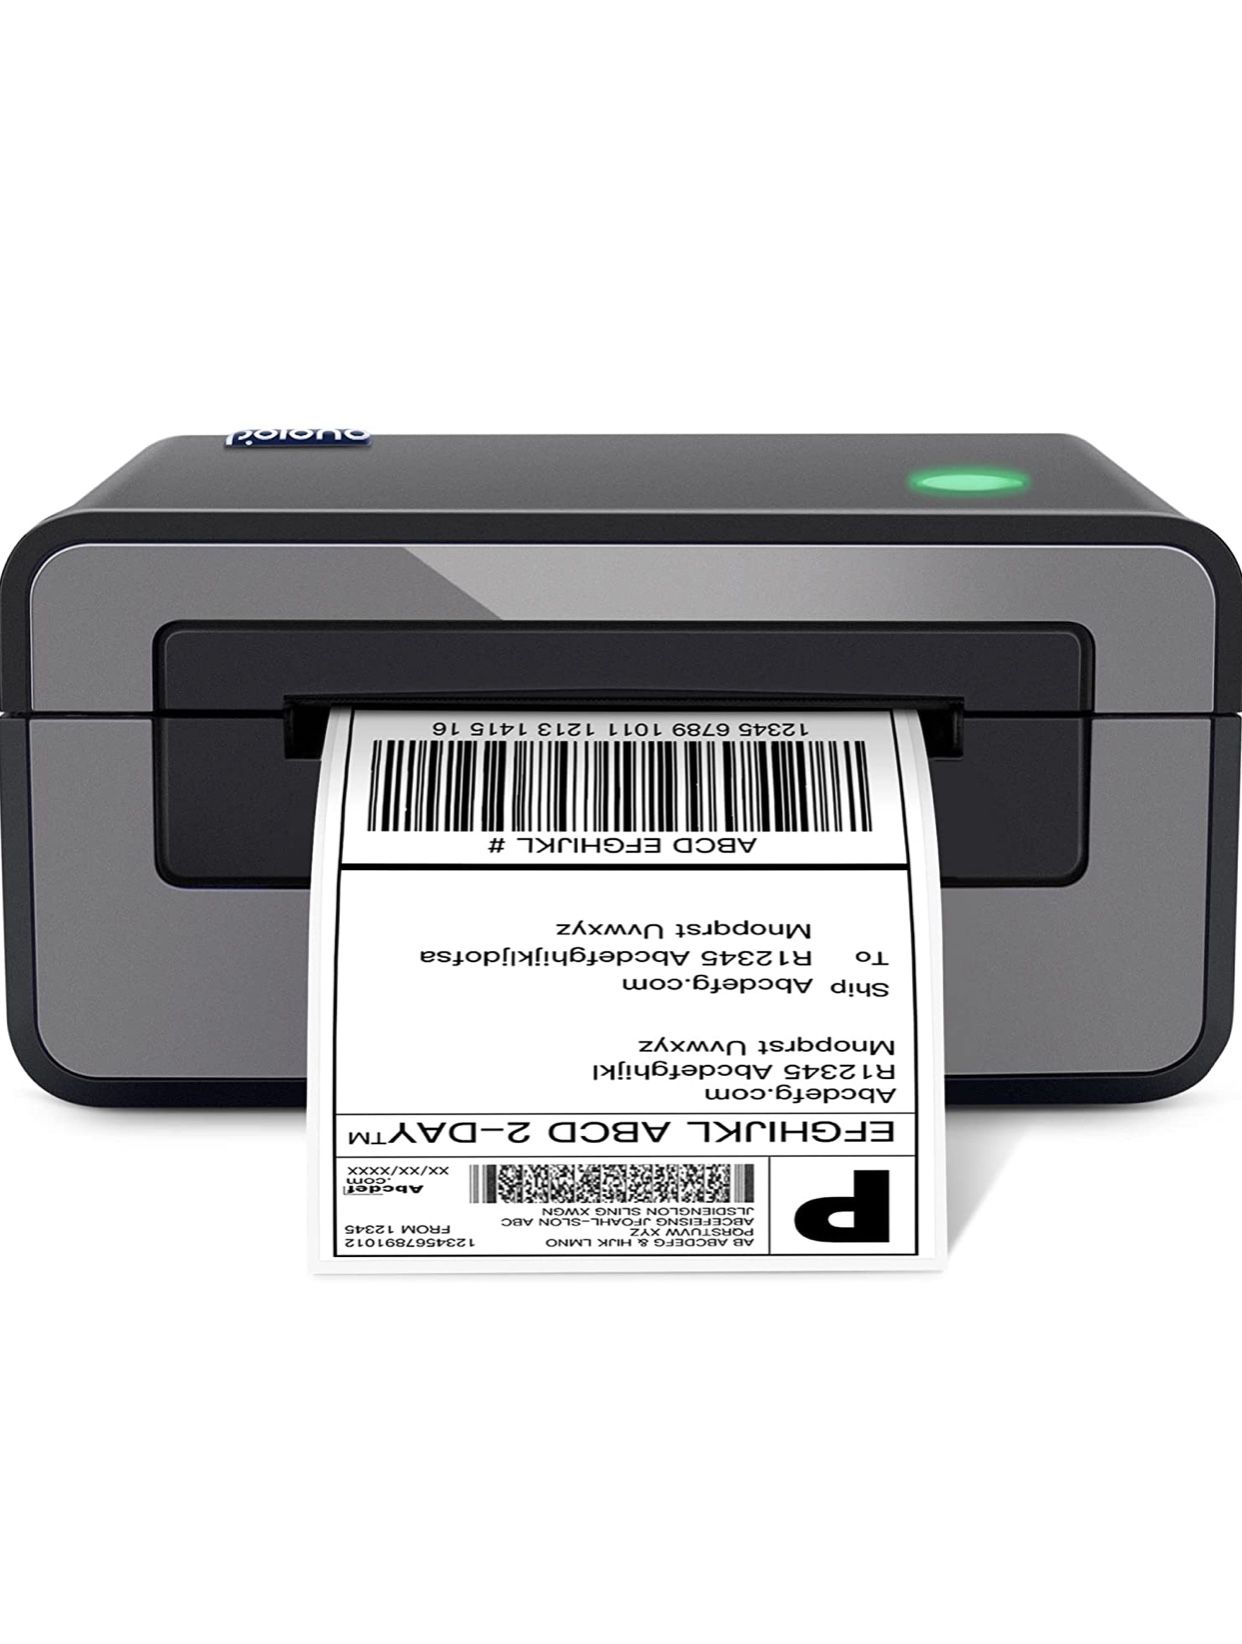 Thermal Label Printer for Sale VA - OfferUp